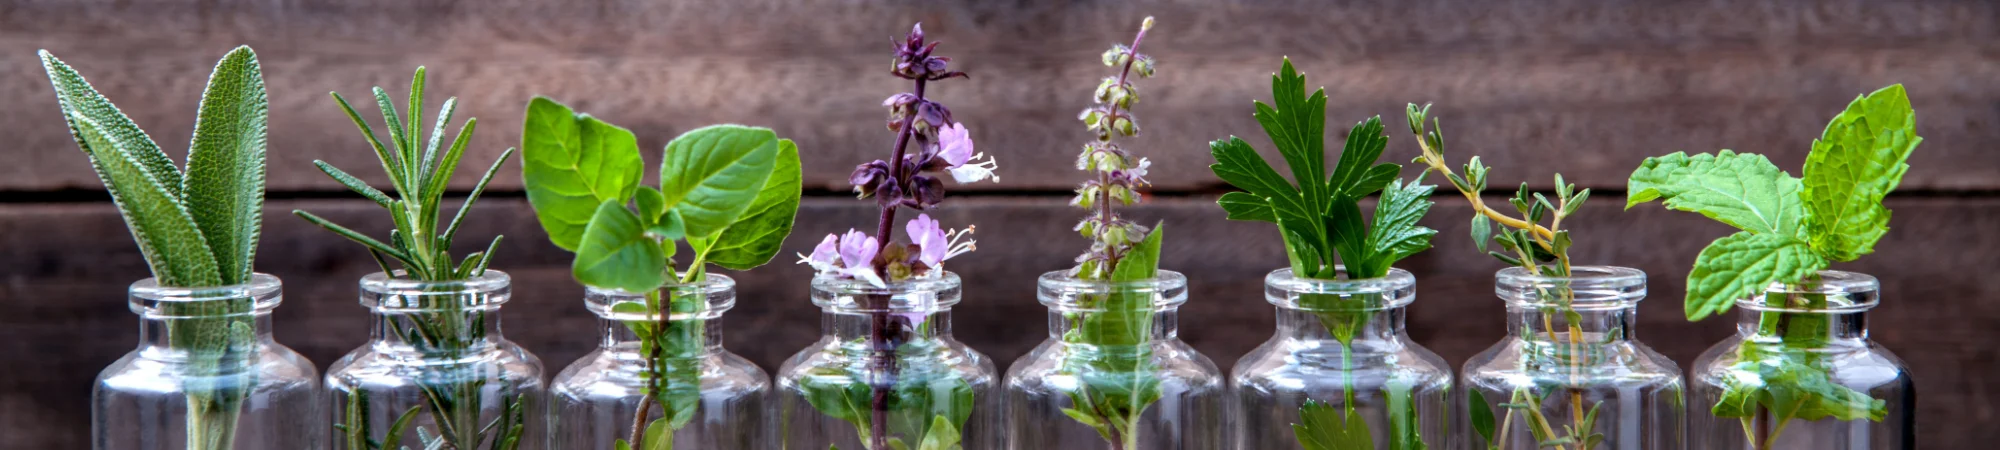 Herbal Blend as a Dietary Supplement